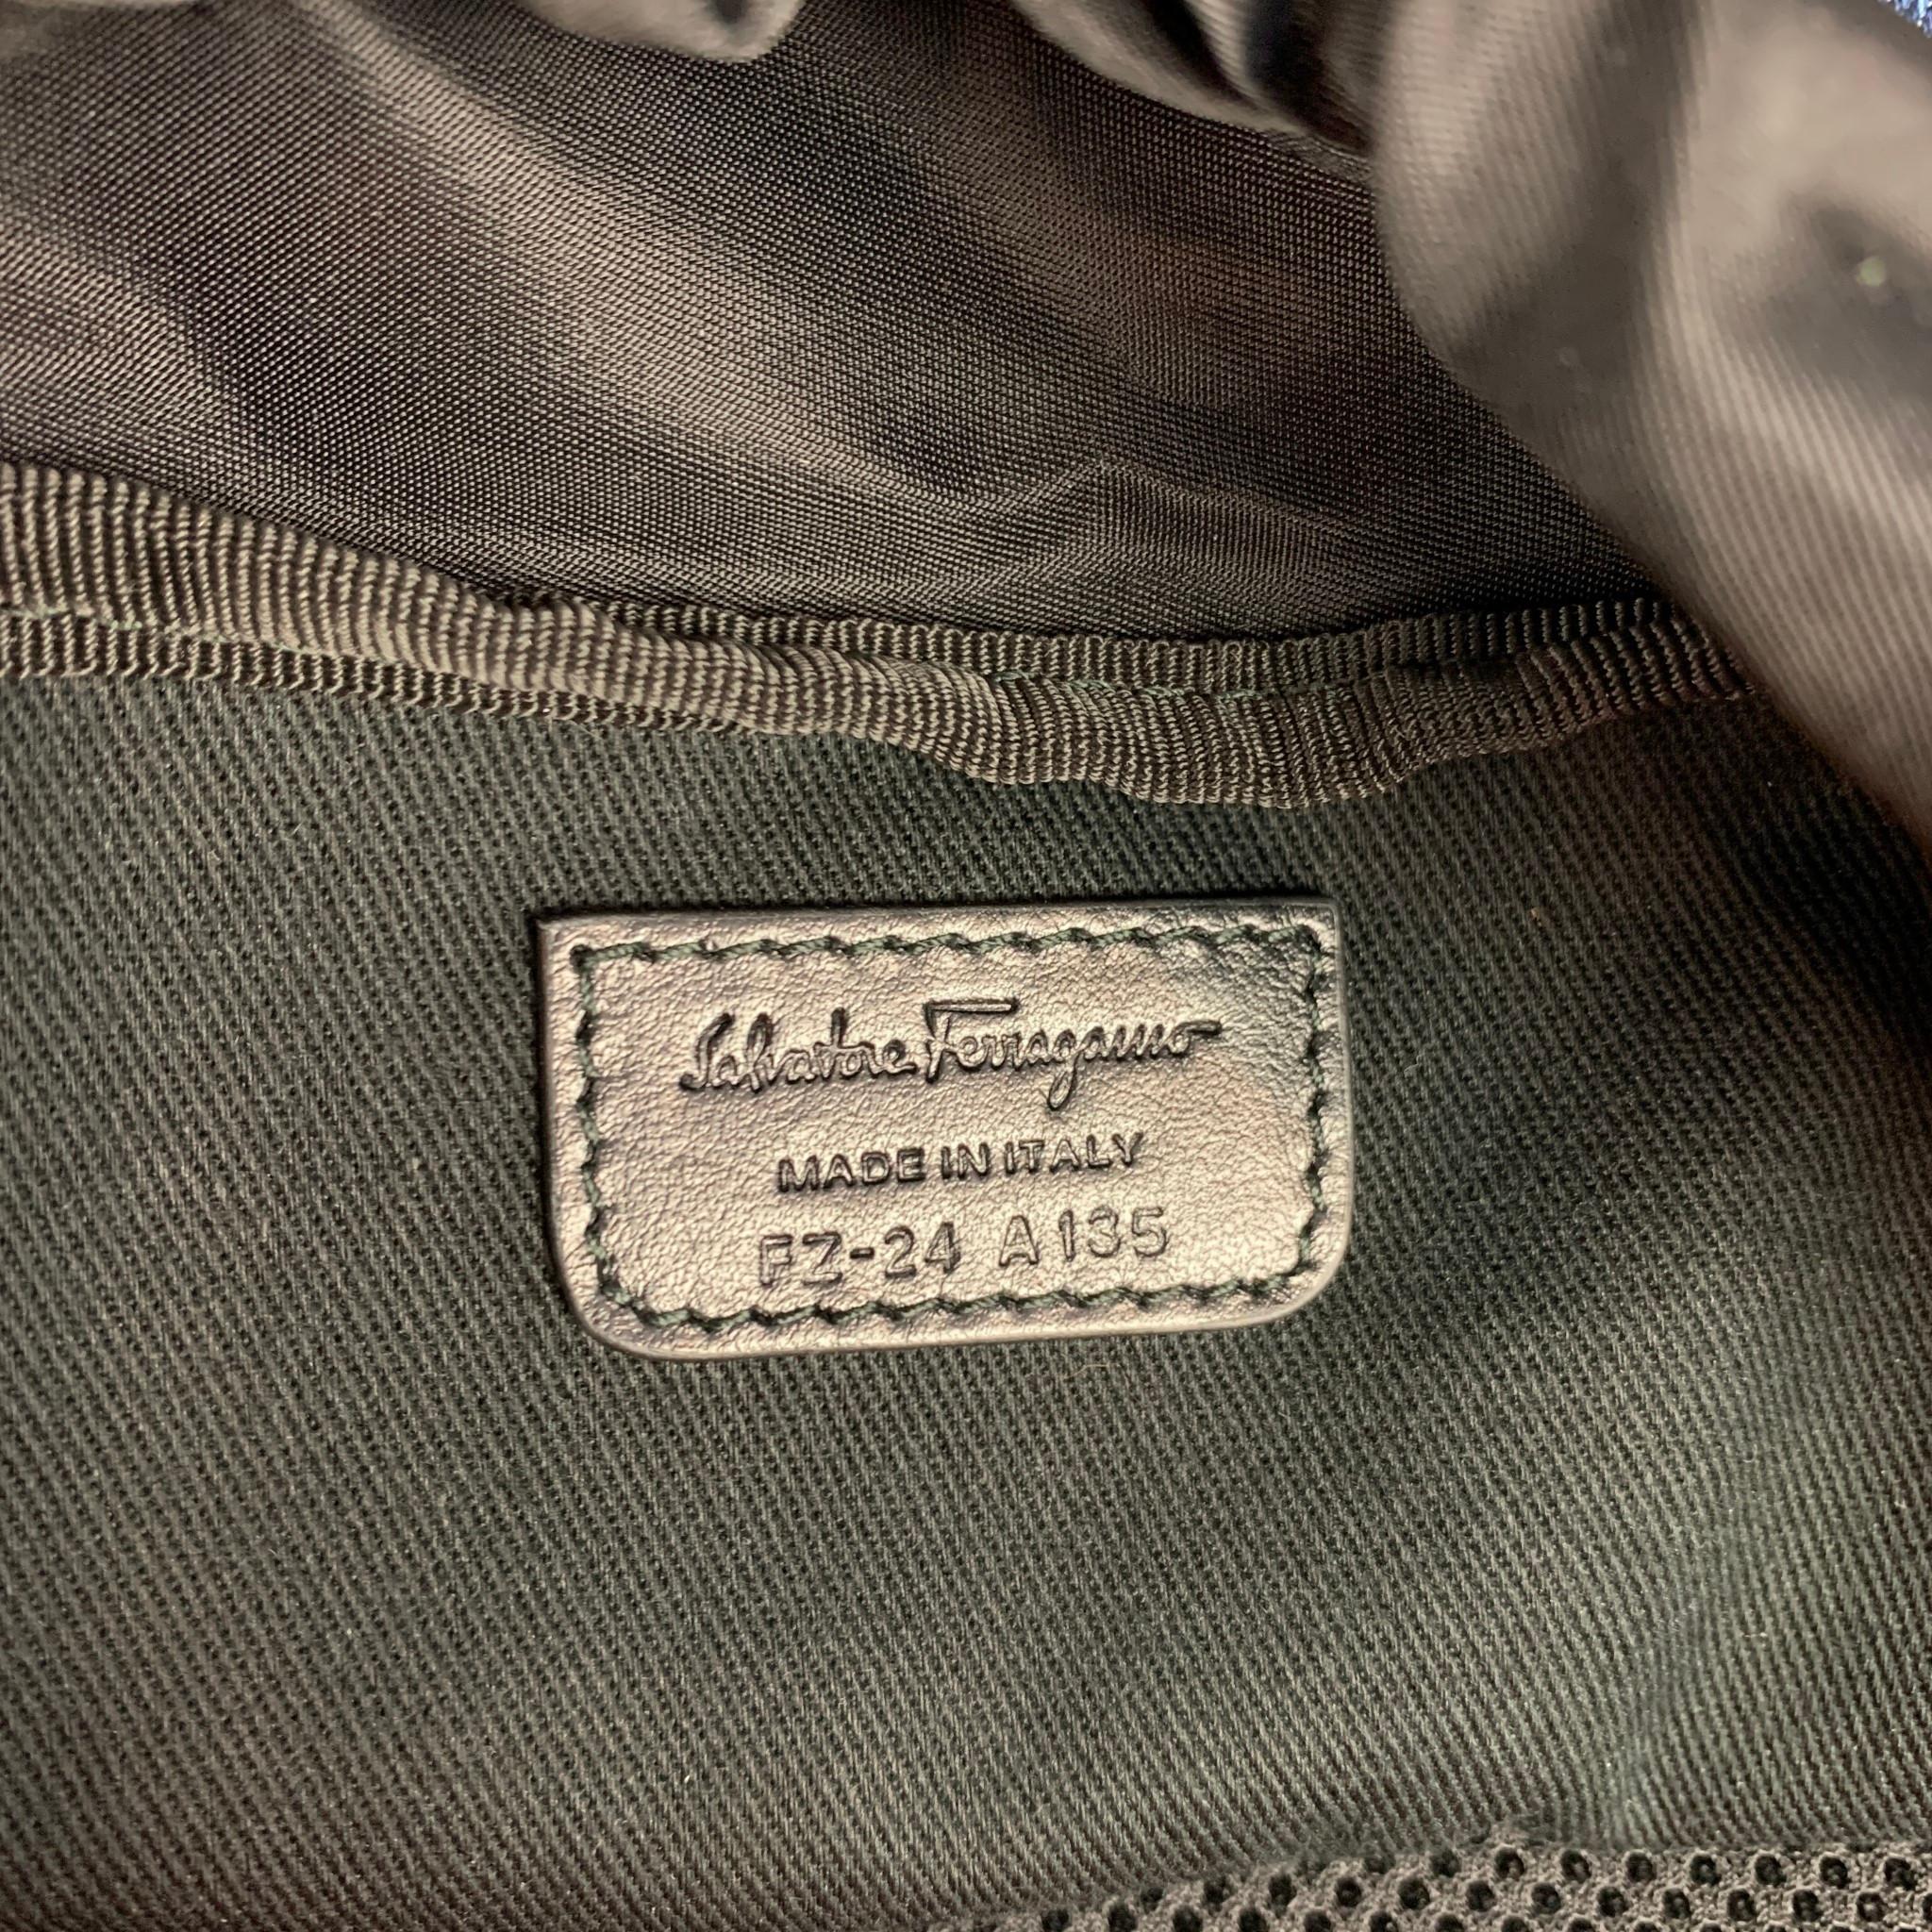 SALVATORE FERRAGAMO Indigo Print Denim Leather Trim Backpack In Excellent Condition In San Francisco, CA